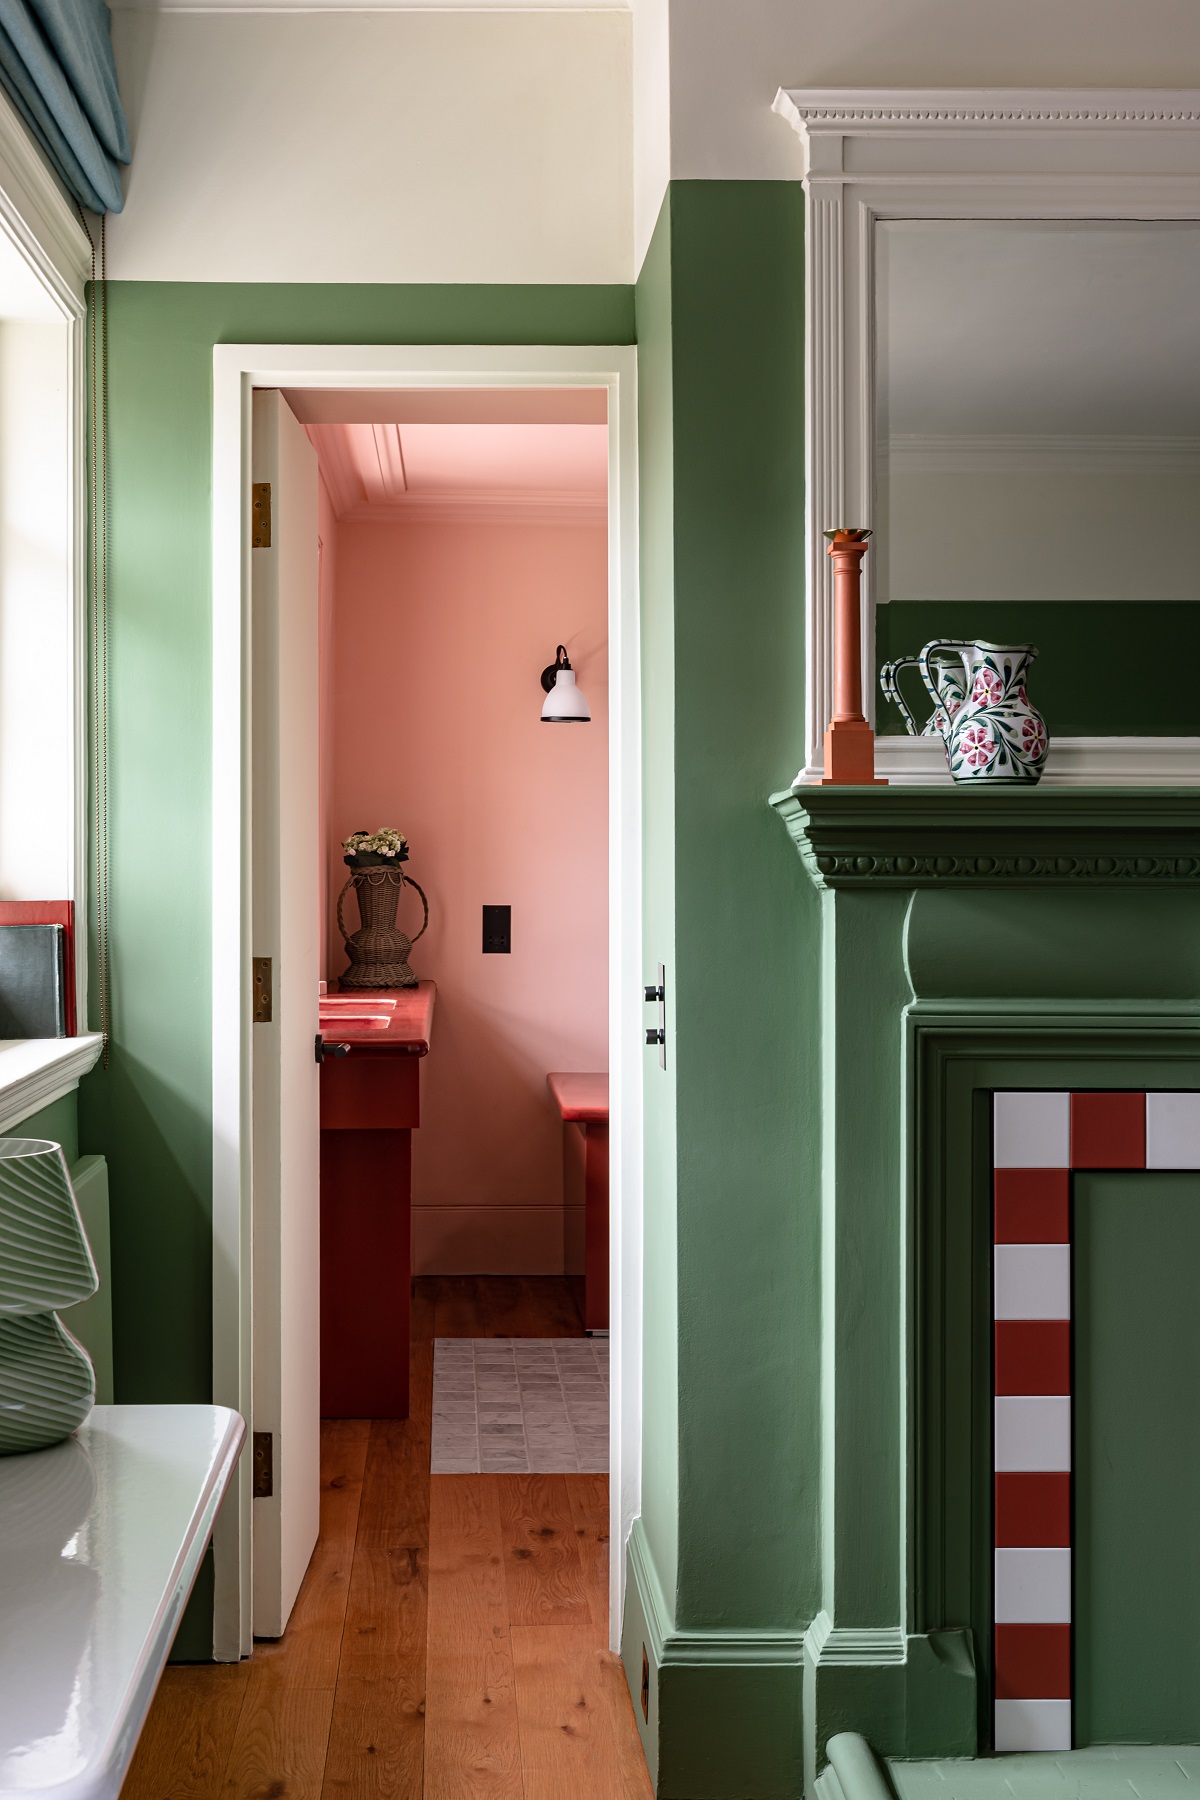 pink room through doorway from contrasting green room